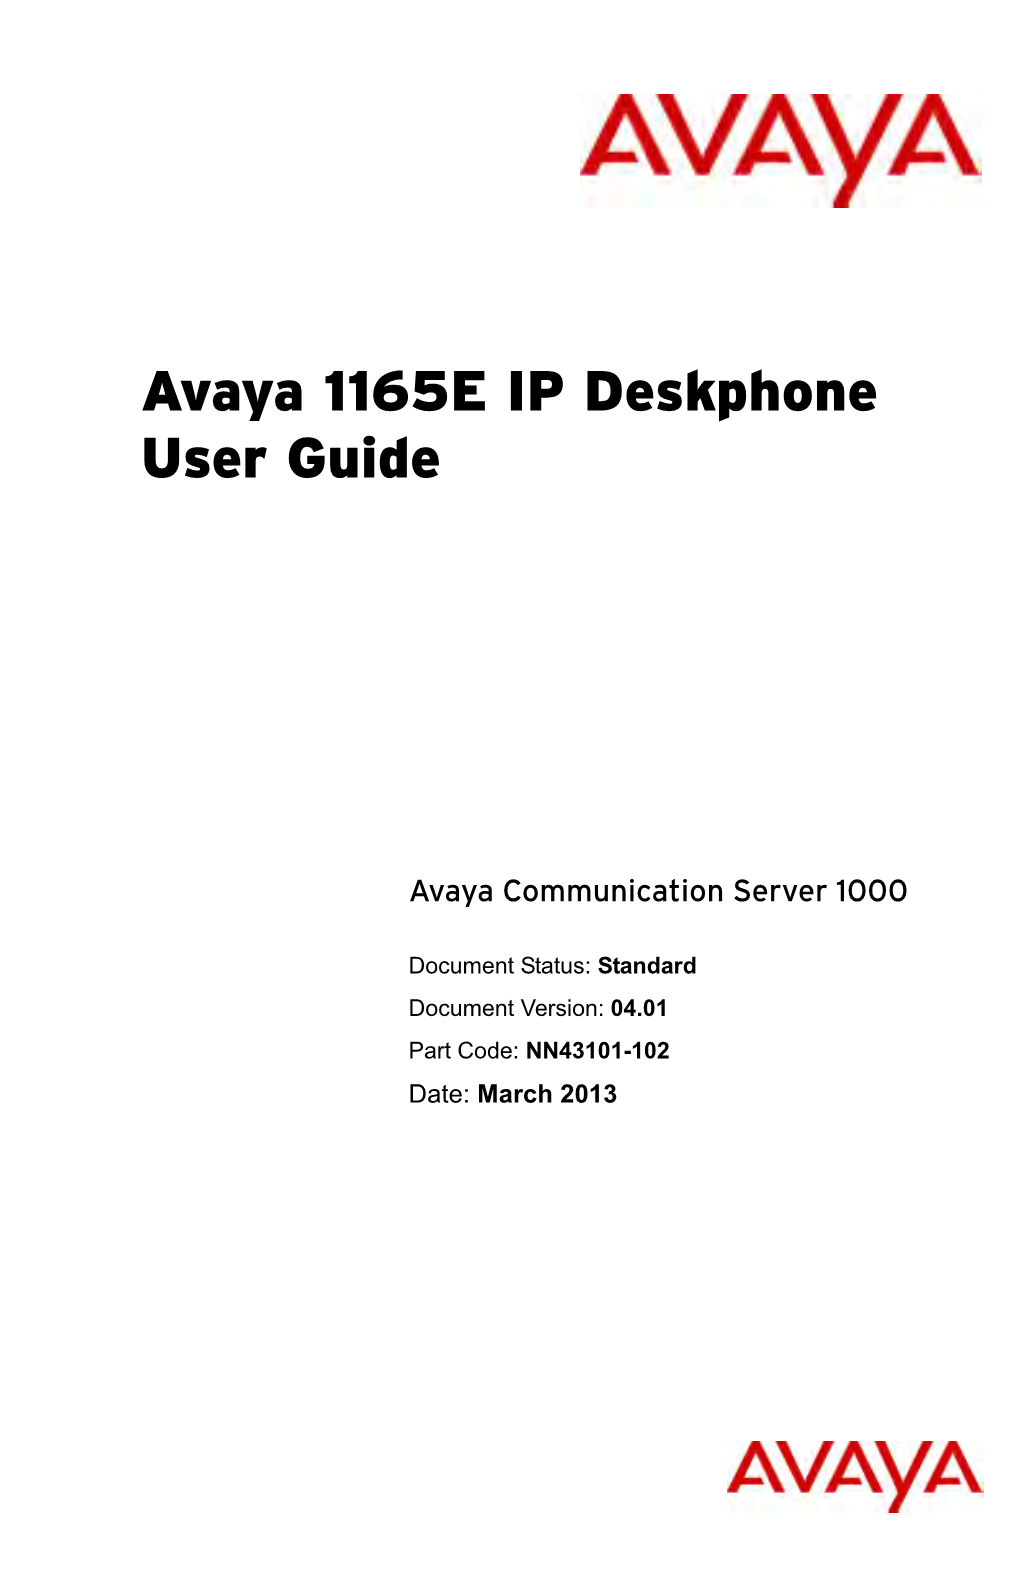 Nortel IP Phone 1165E User Guide (CS 1000)